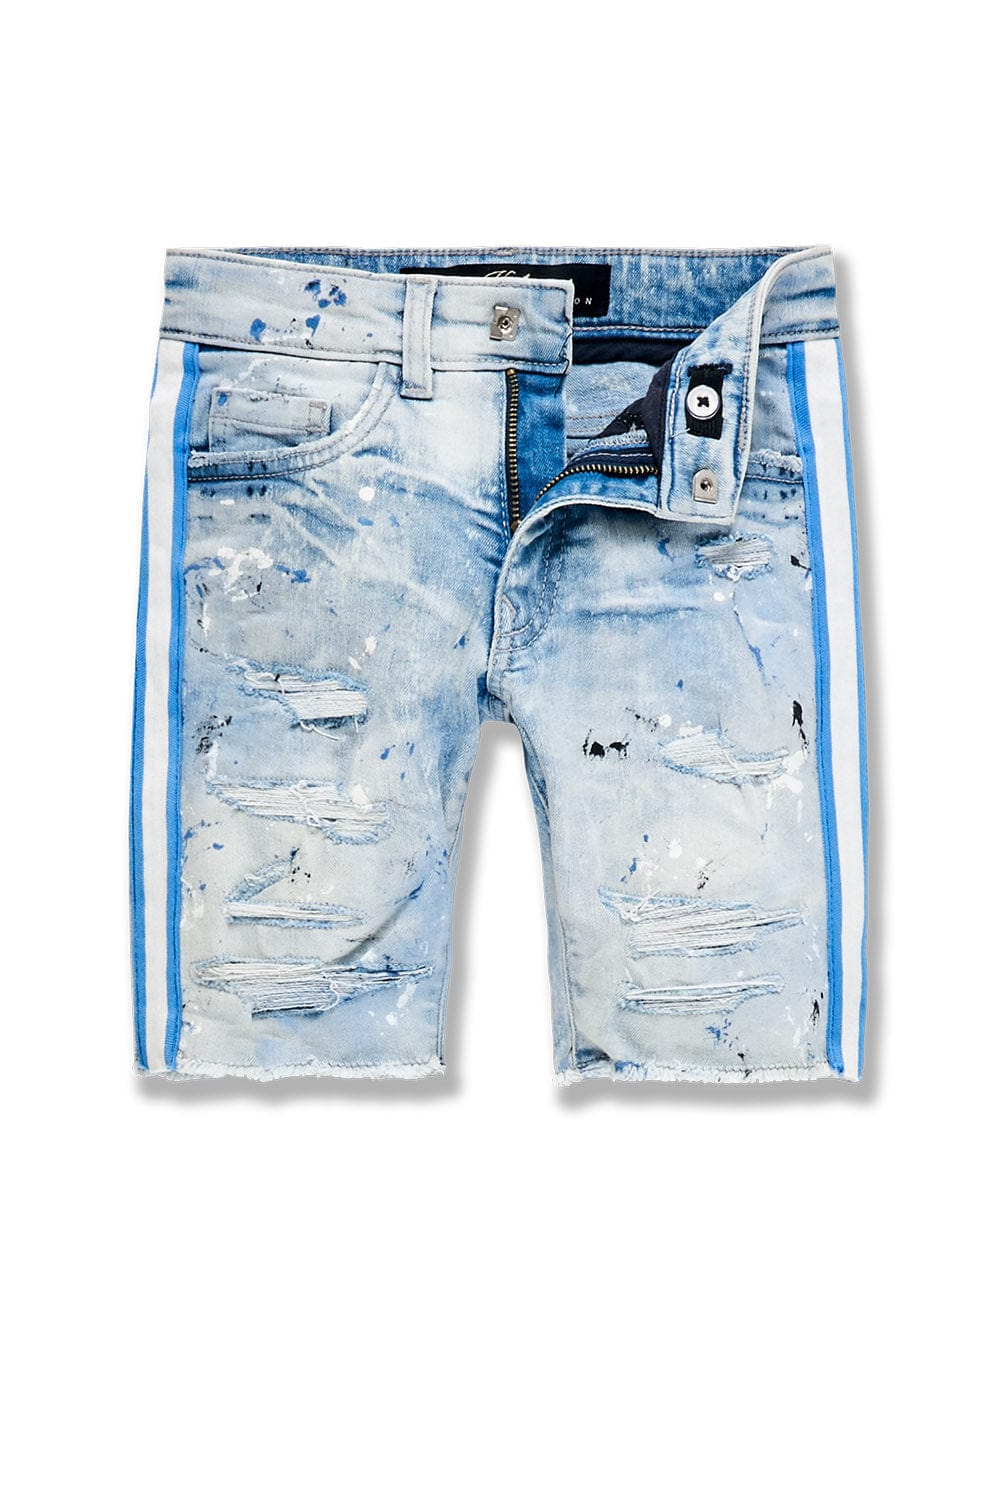 JC Kids Kids Odyssey Striped Denim Shorts (Name Your Price) Ice Blue / 2